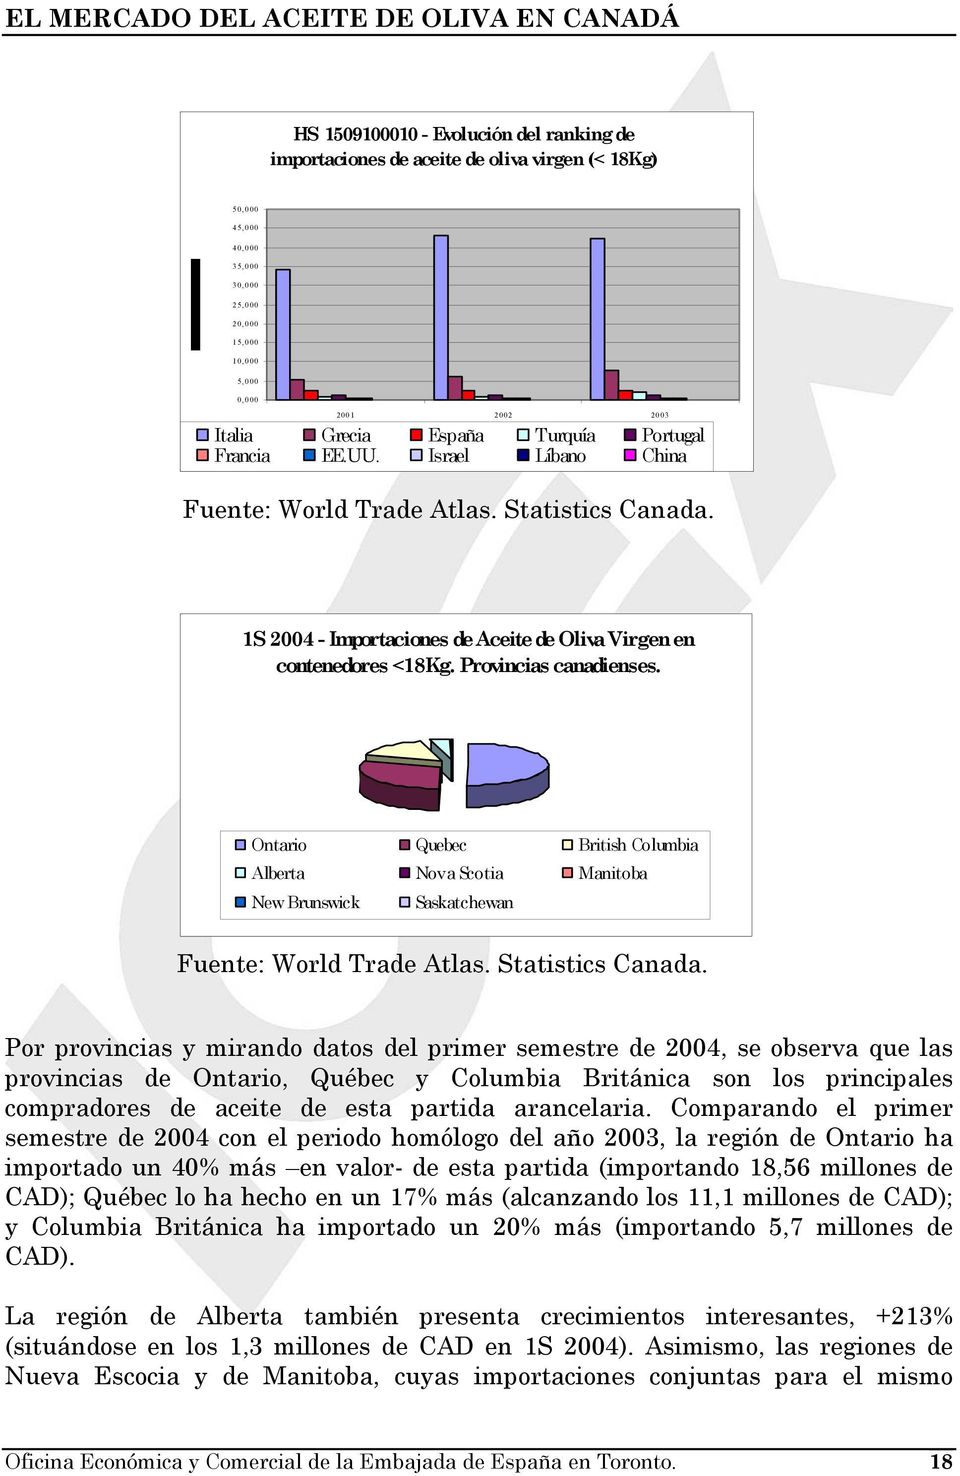 Provincias canadienses. Ontario Quebec British Columbia Alberta Nova Scotia Manitoba New Brunswick Saskatchewan Fuente: World Trade Atlas. Statistics Canada.